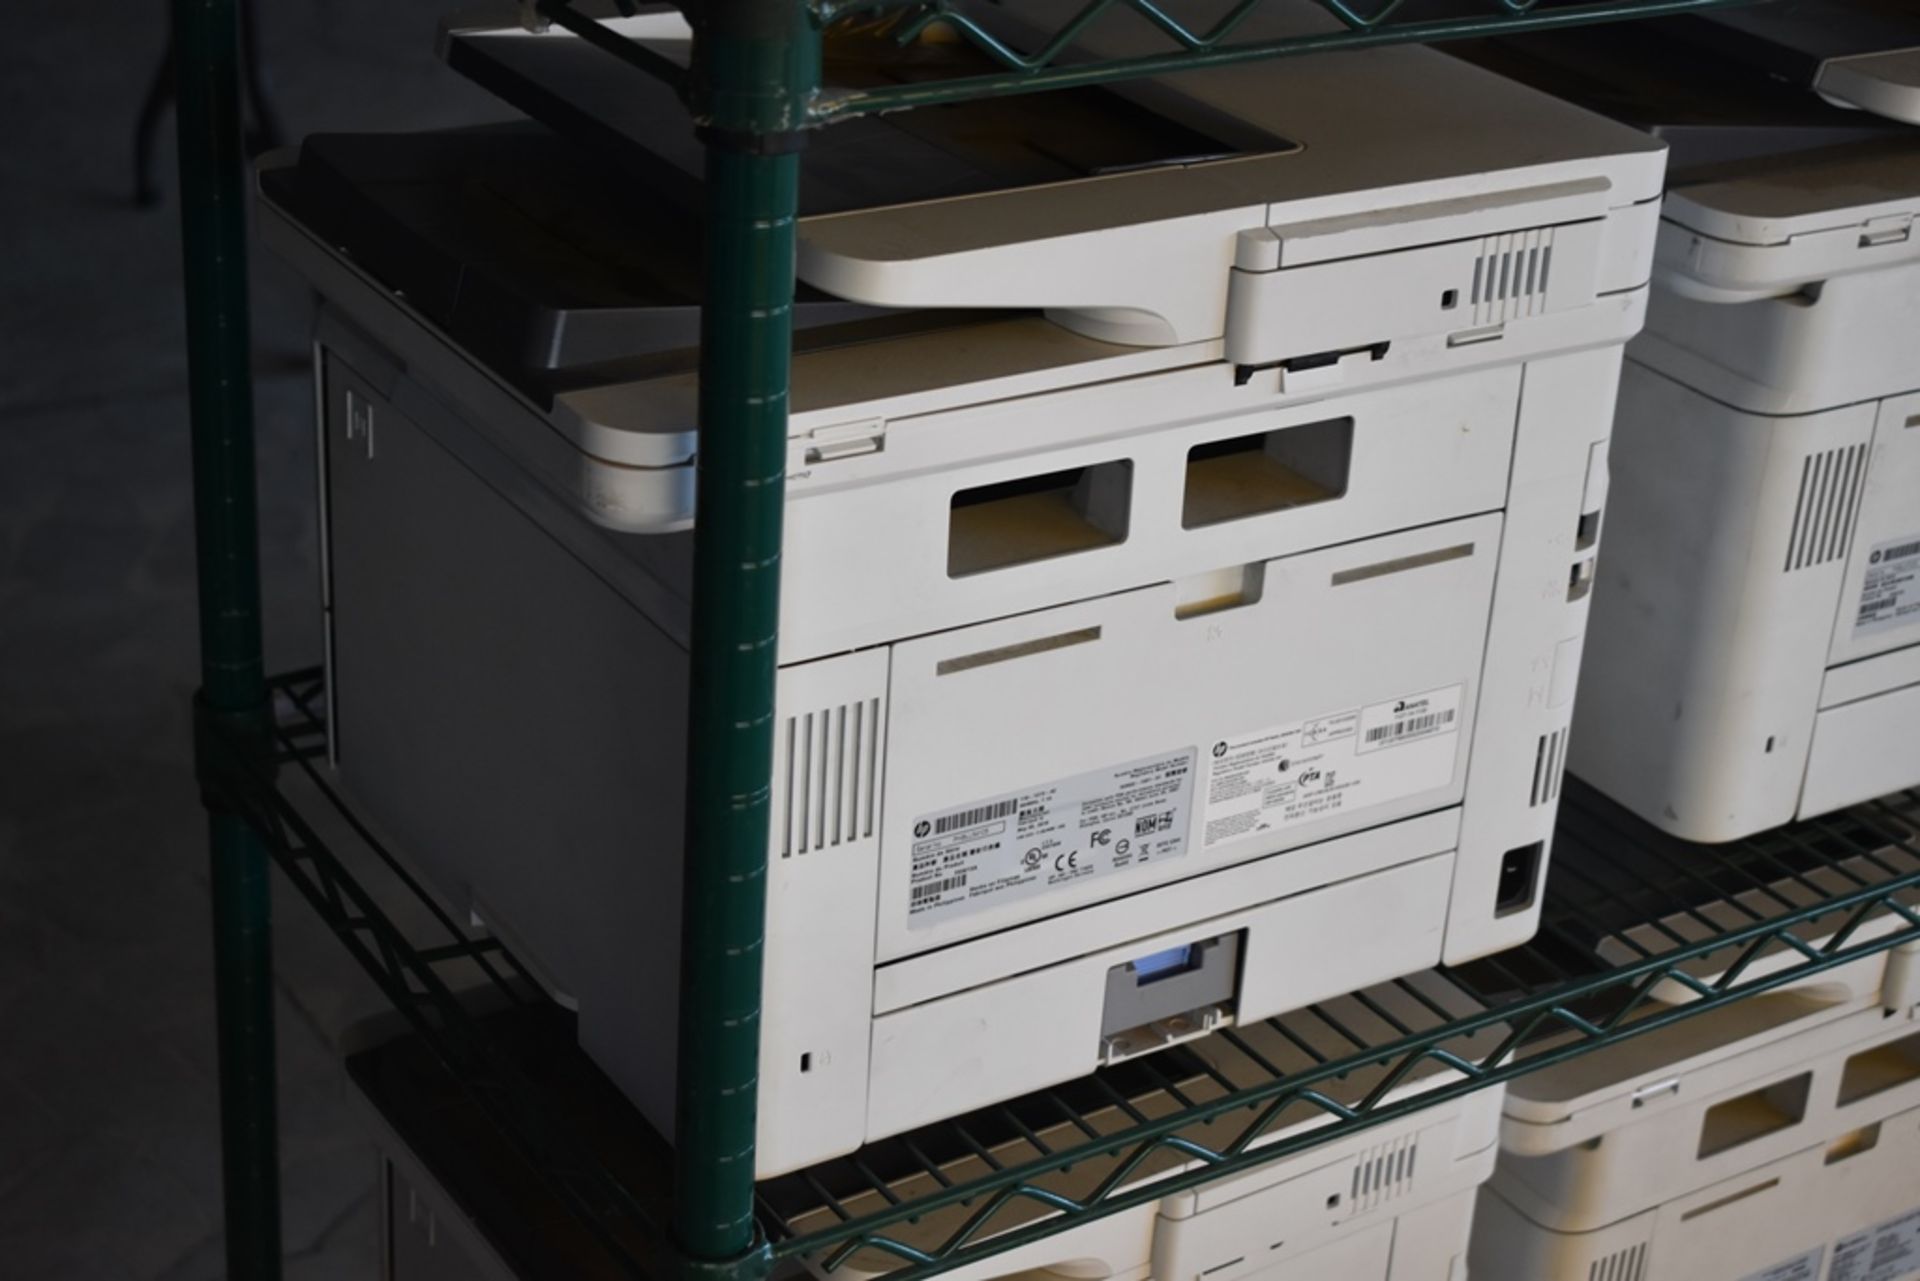 3 impresoras multifuncional marca HP, Modelo: LaserJet Pro MFP M426fdw - Image 16 of 21